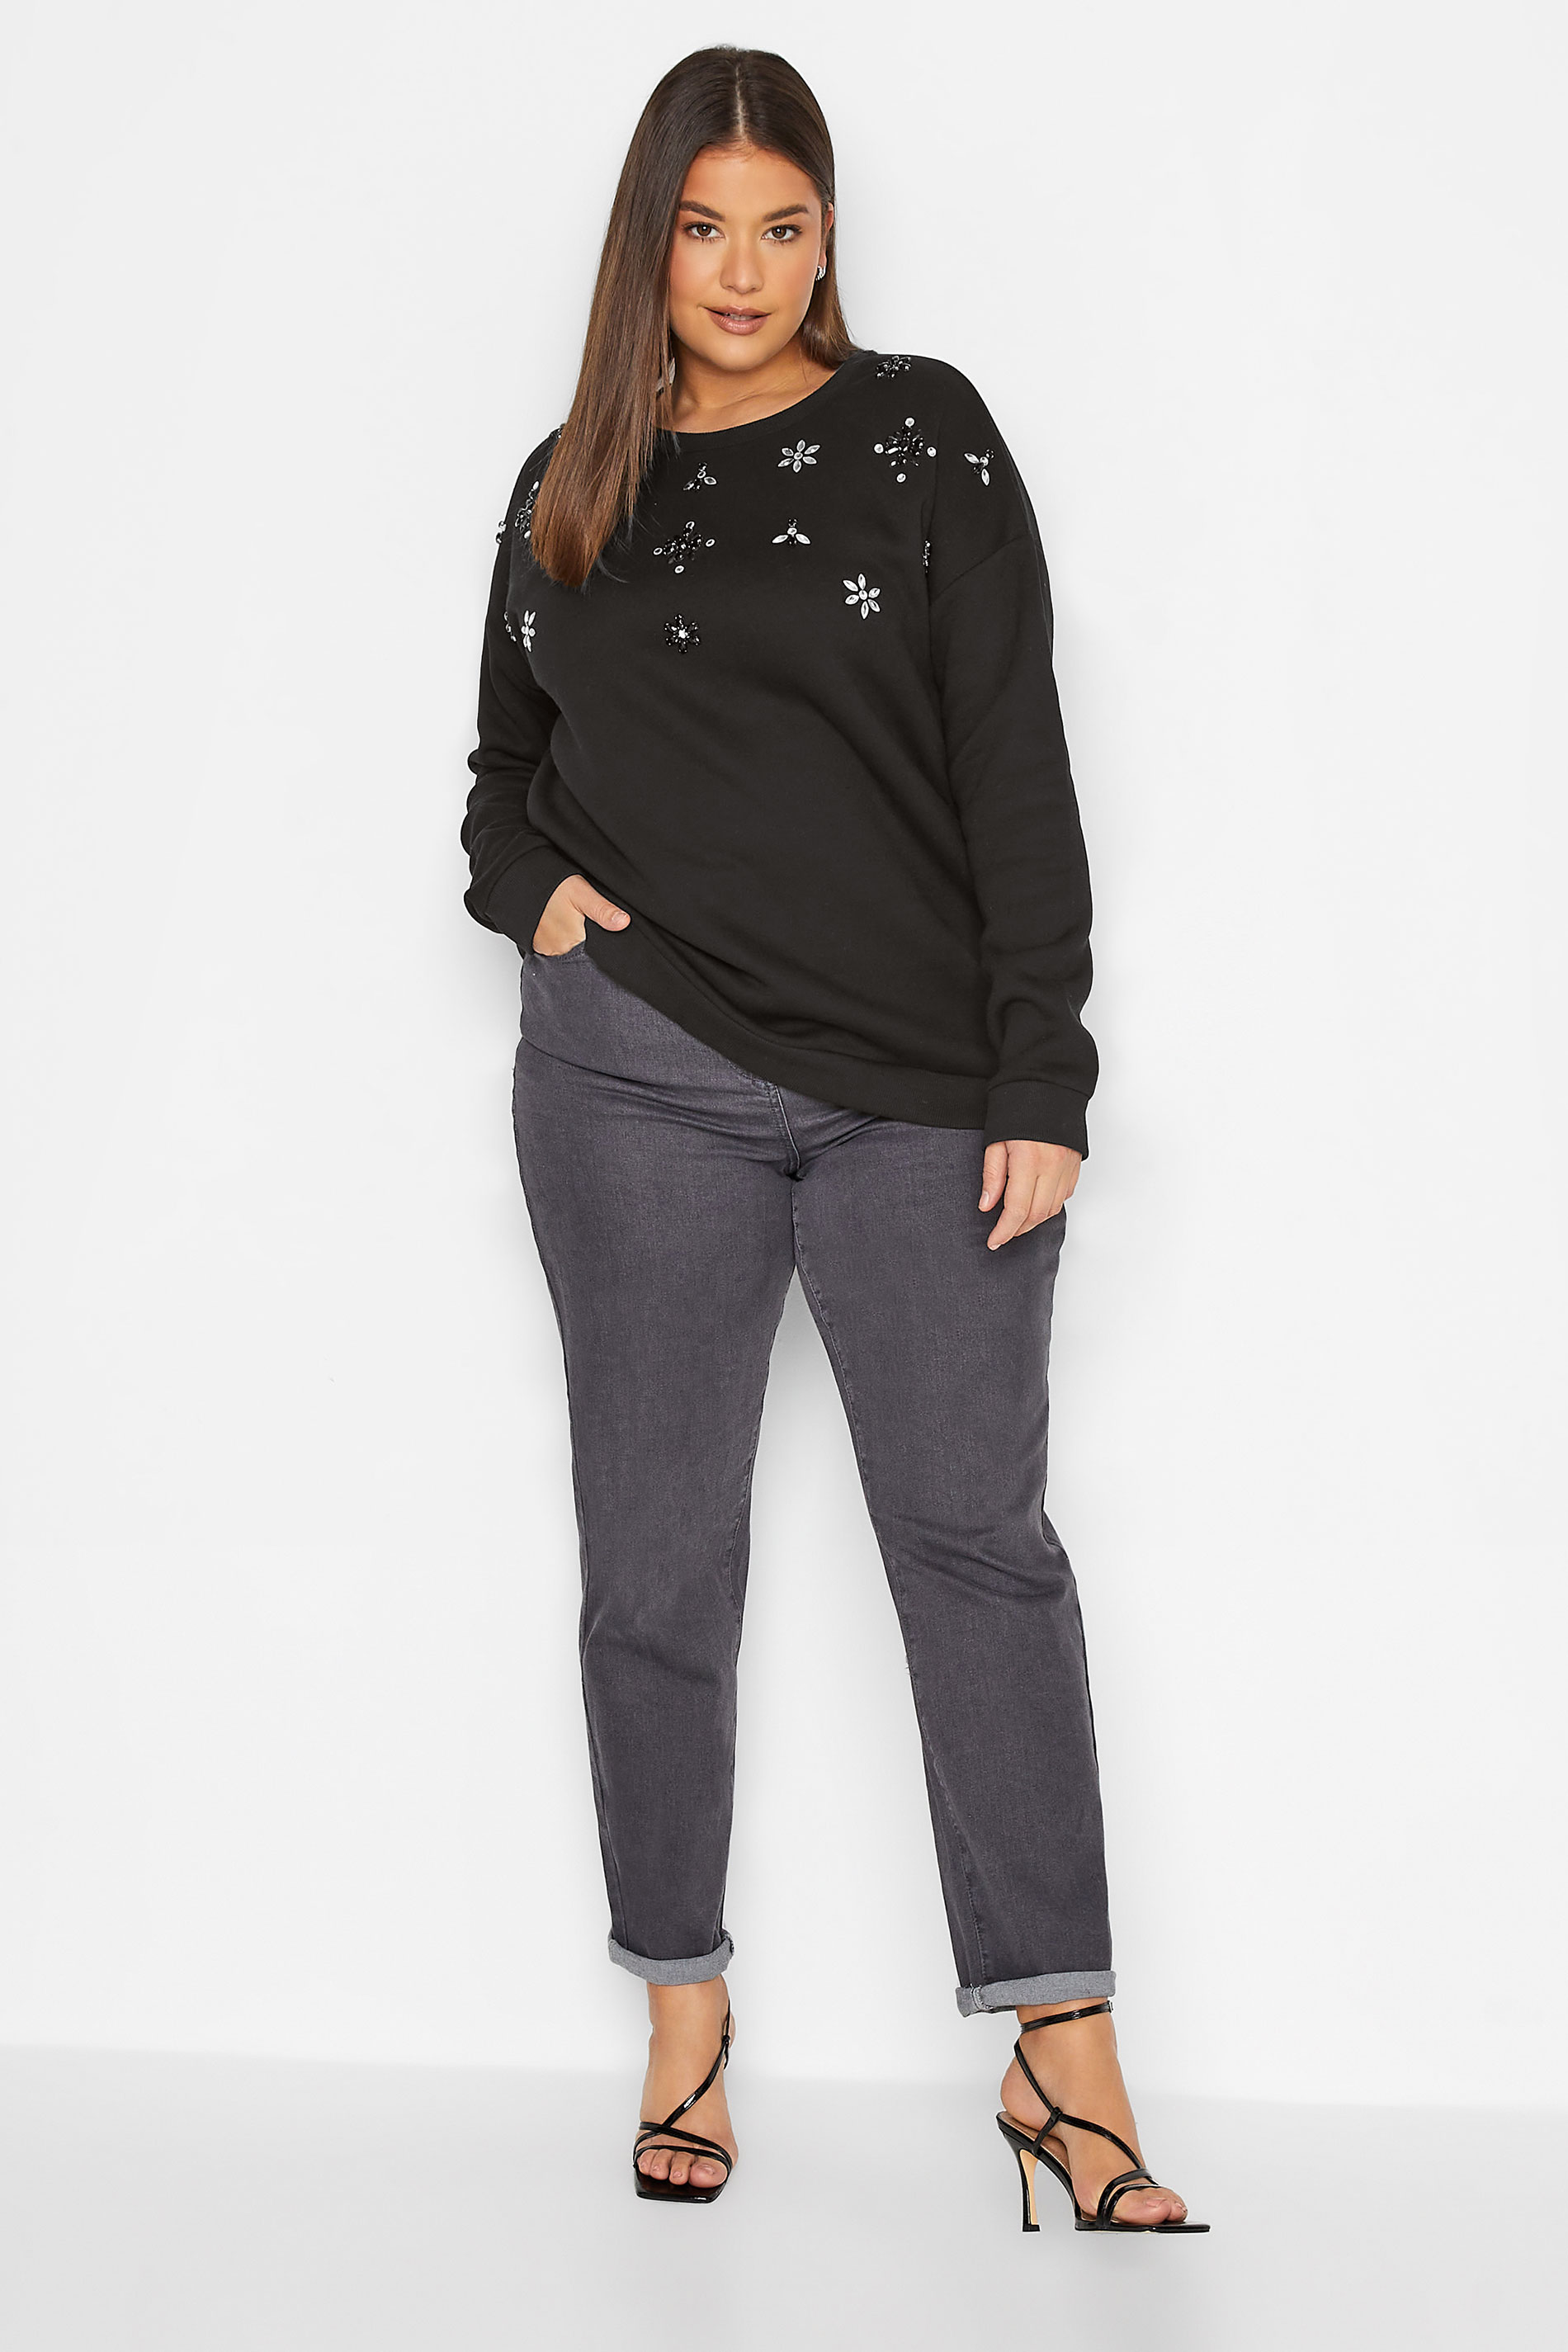 LTS Tall Women's Black Embellished Sweatshirt | Long Tall Sally 2